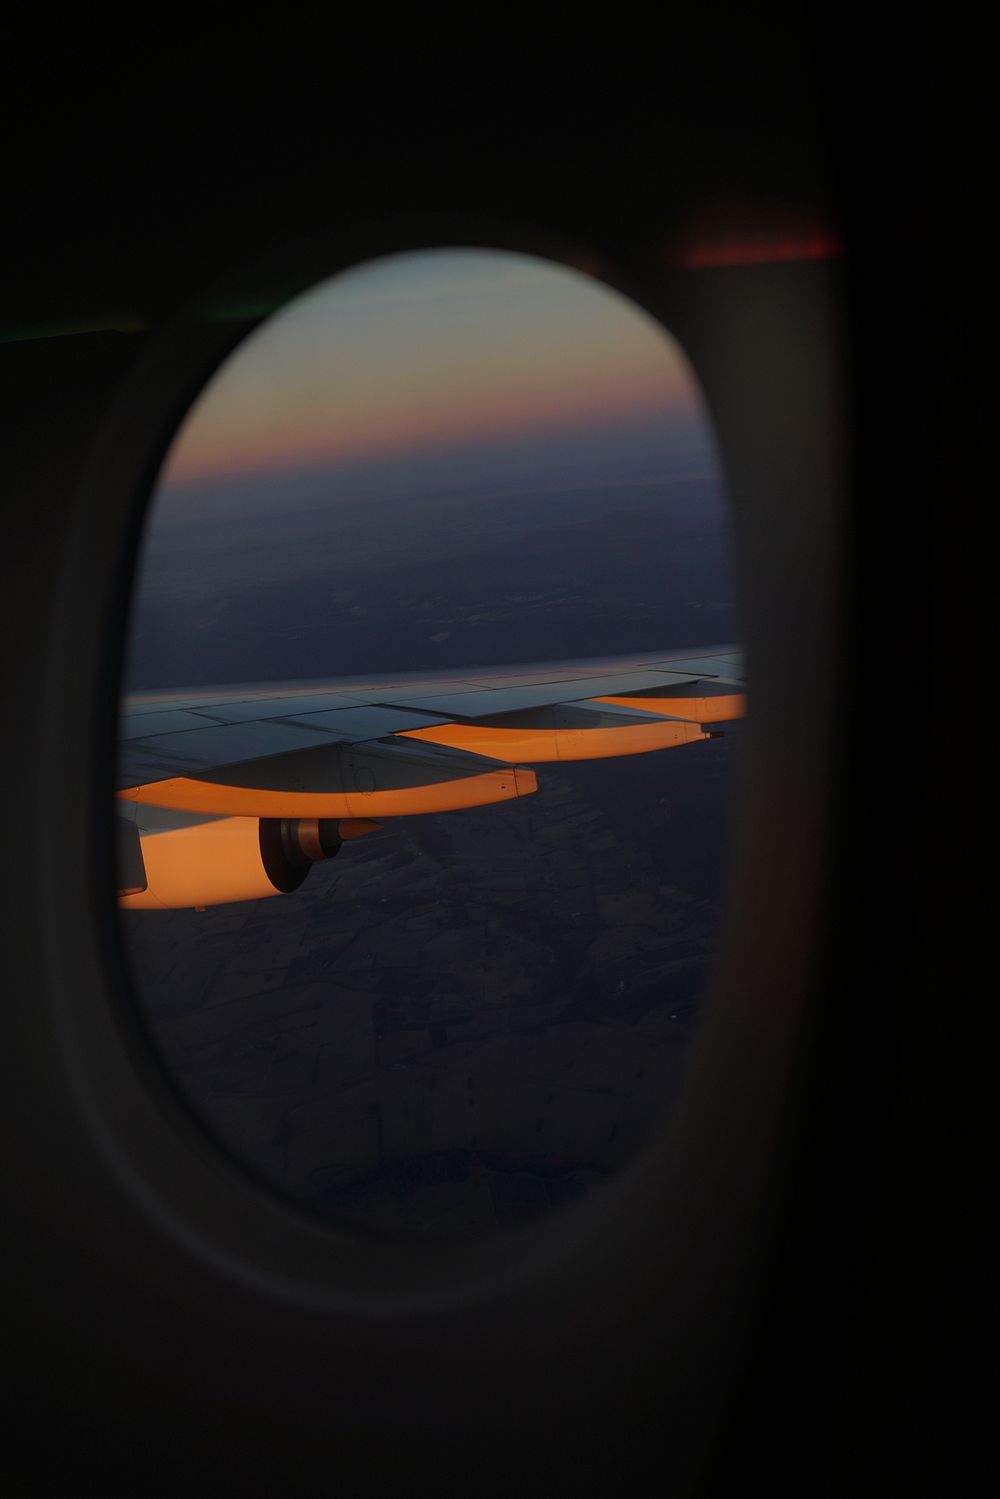 View through a plane window near Bunyip, Victoria. Original public domain image from Wikimedia Commons